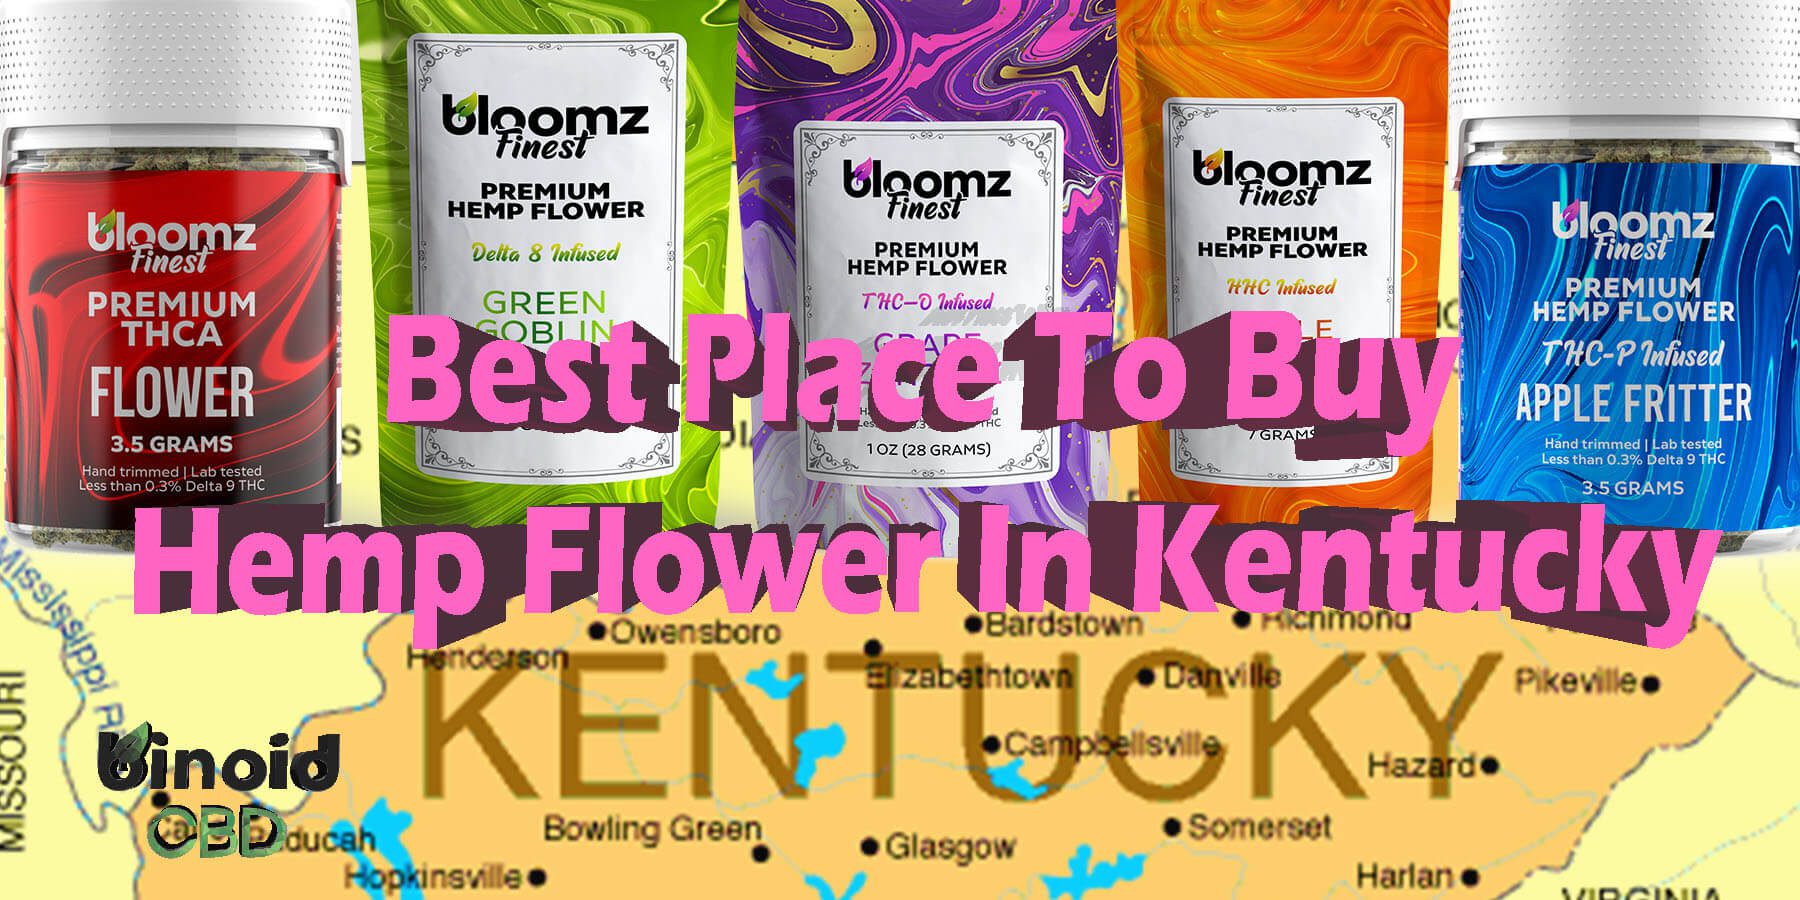 Buy Hemp Flower Kentucky Pre-Rolls Get Online Near Me For Sale Best Brand Strongest Real Legal Store Shop Reddit